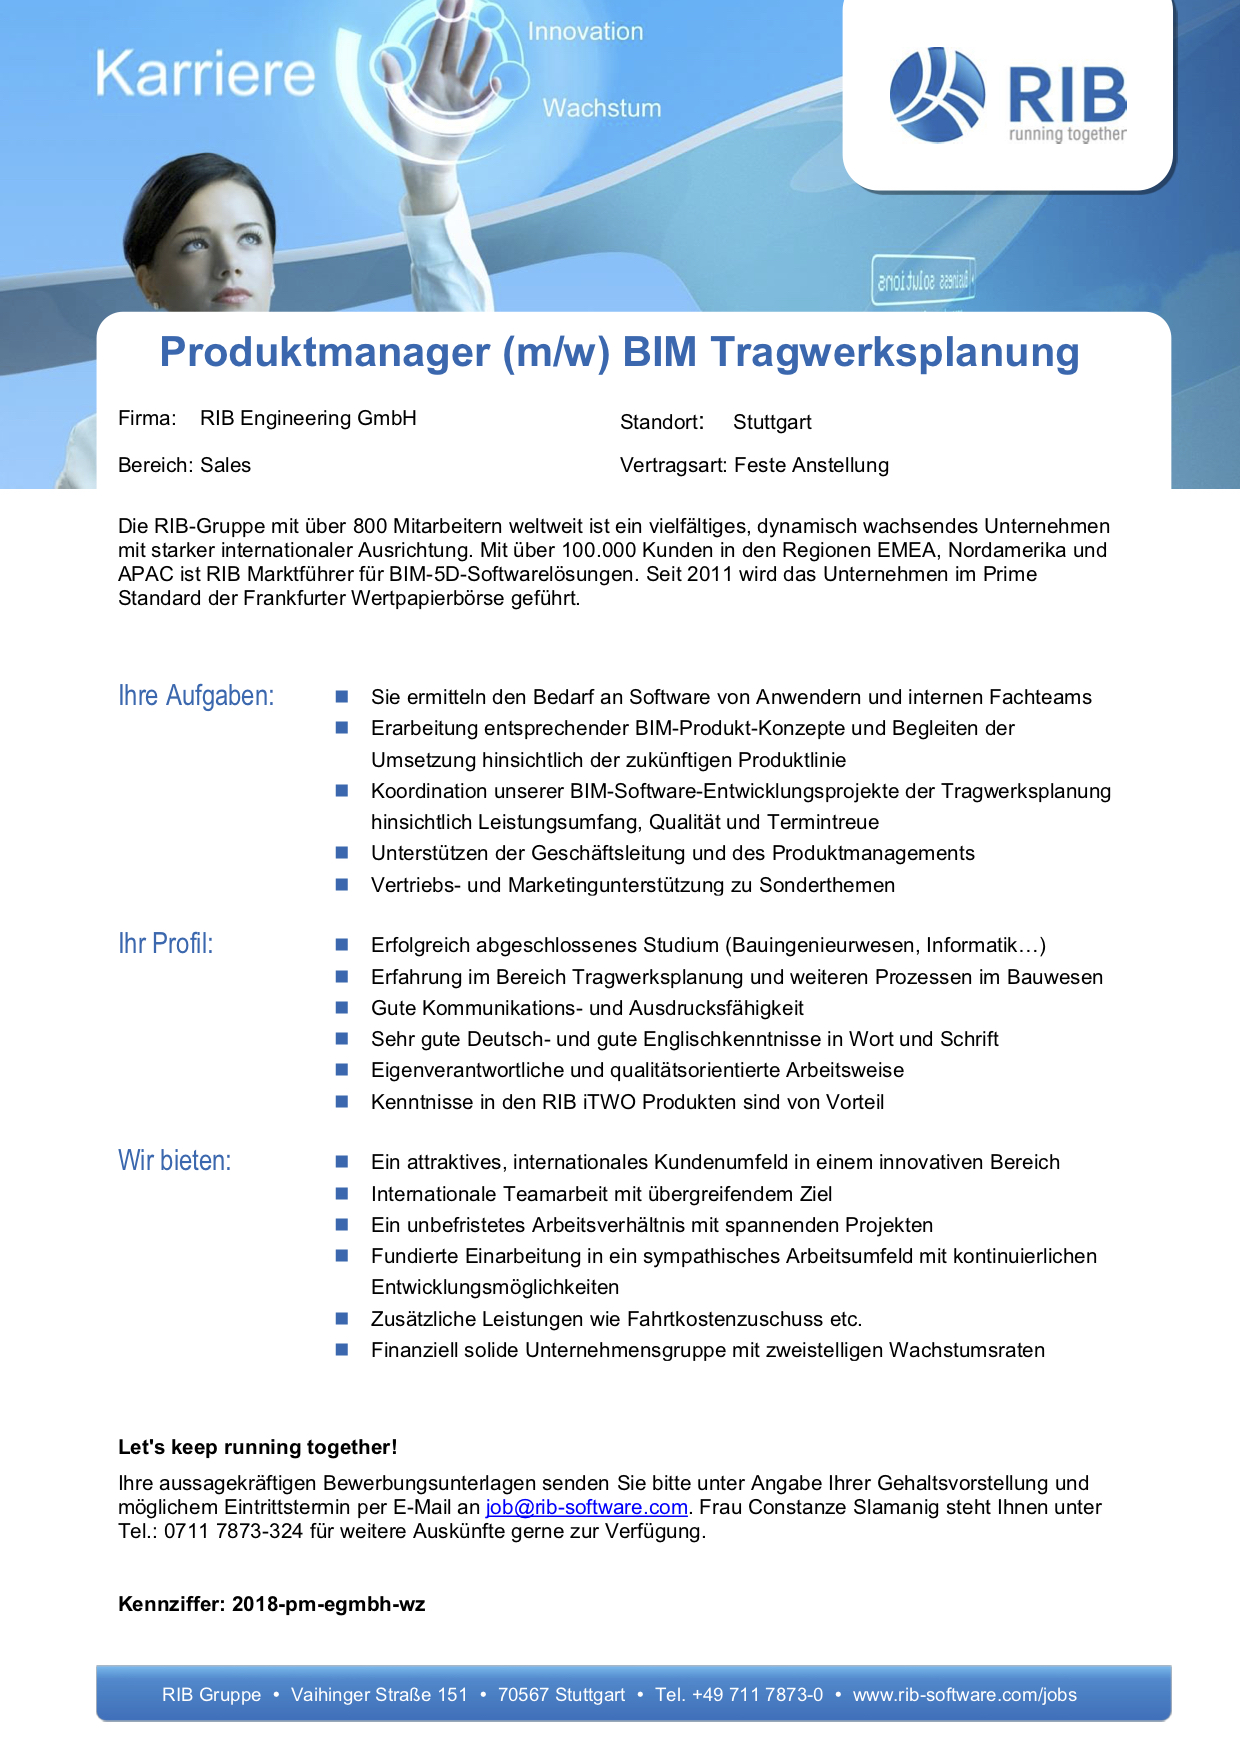 RIB Produktmanager BIM Tragwerksplanung